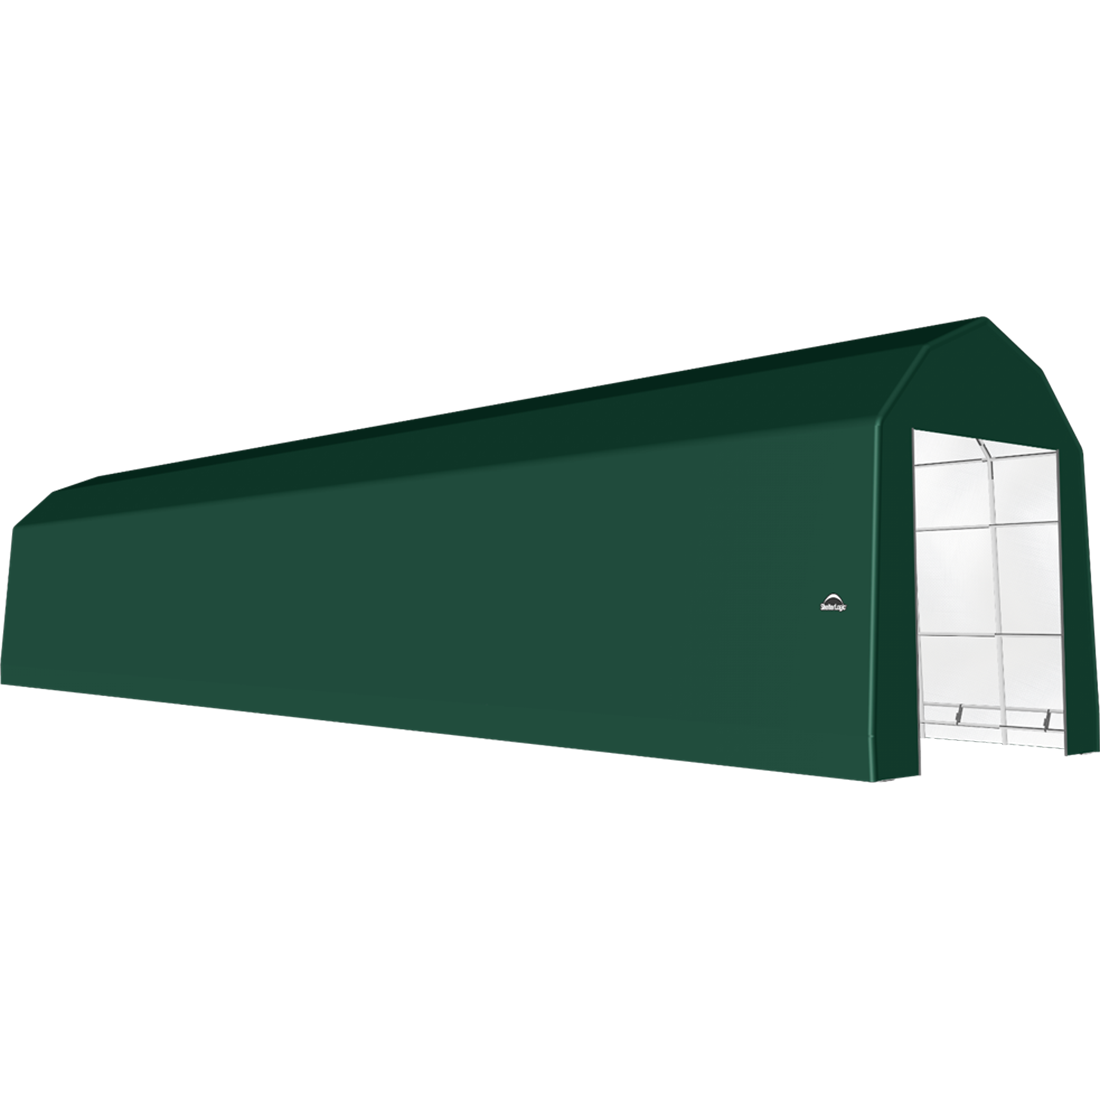 ShelterTech SP Series Barn Shelter, 15 ft. x 84 ft. x 17 ft. Heavy Duty PVC 14.5 oz. Green